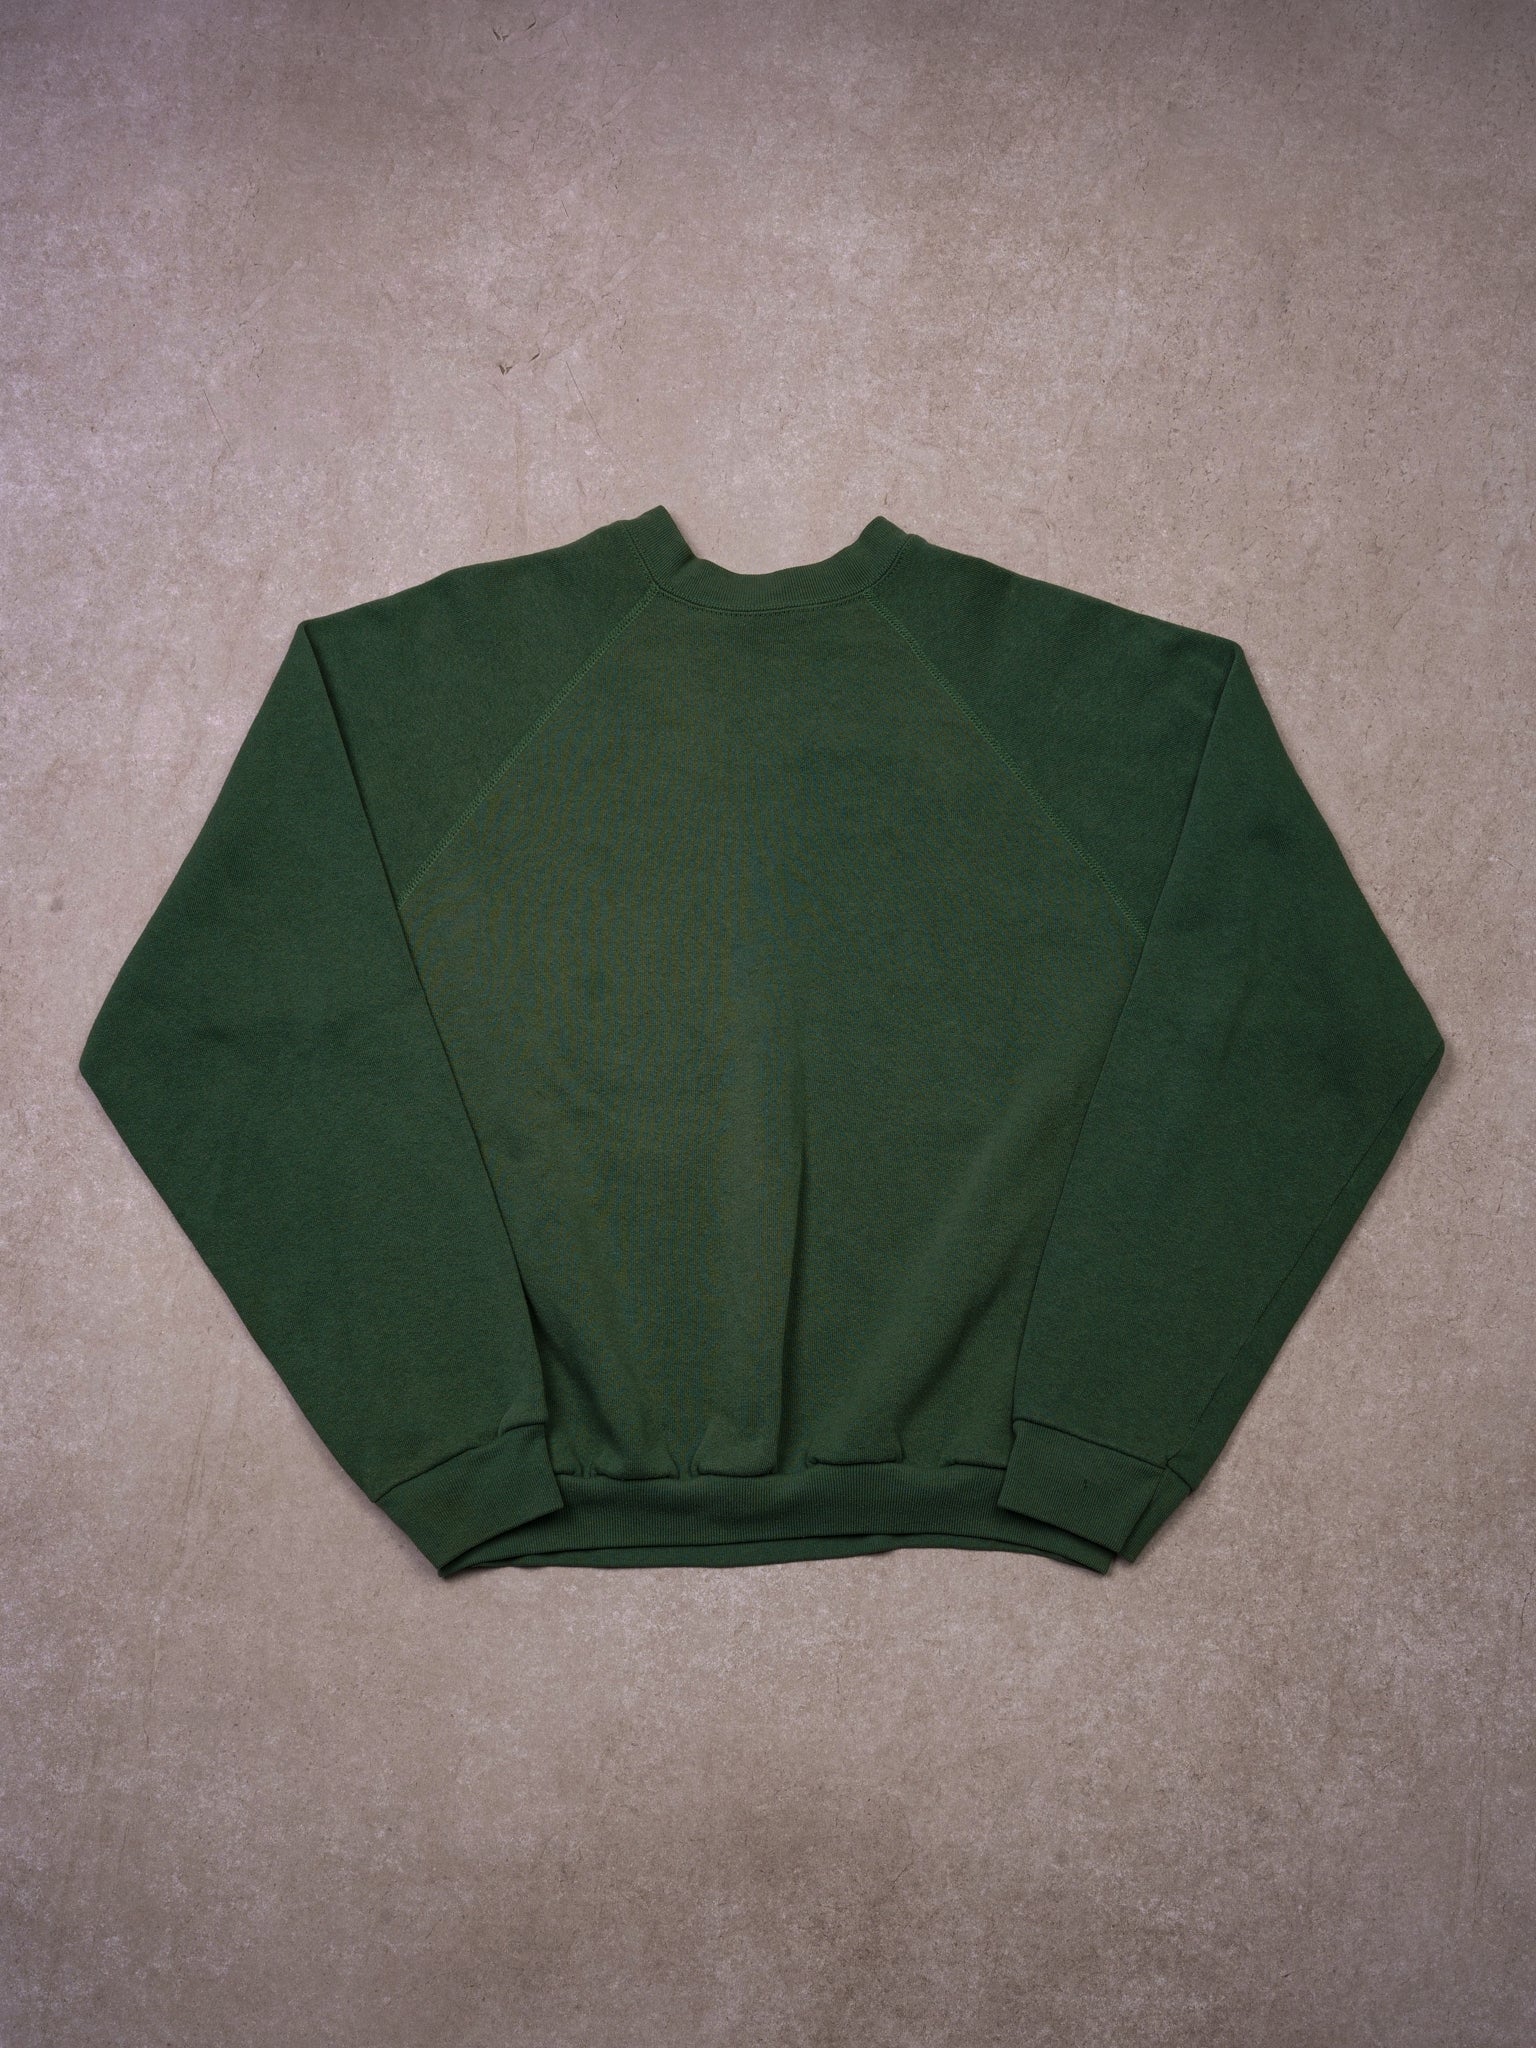 Vintage 90s Washed Green Tutex Blank Crewneck (M)